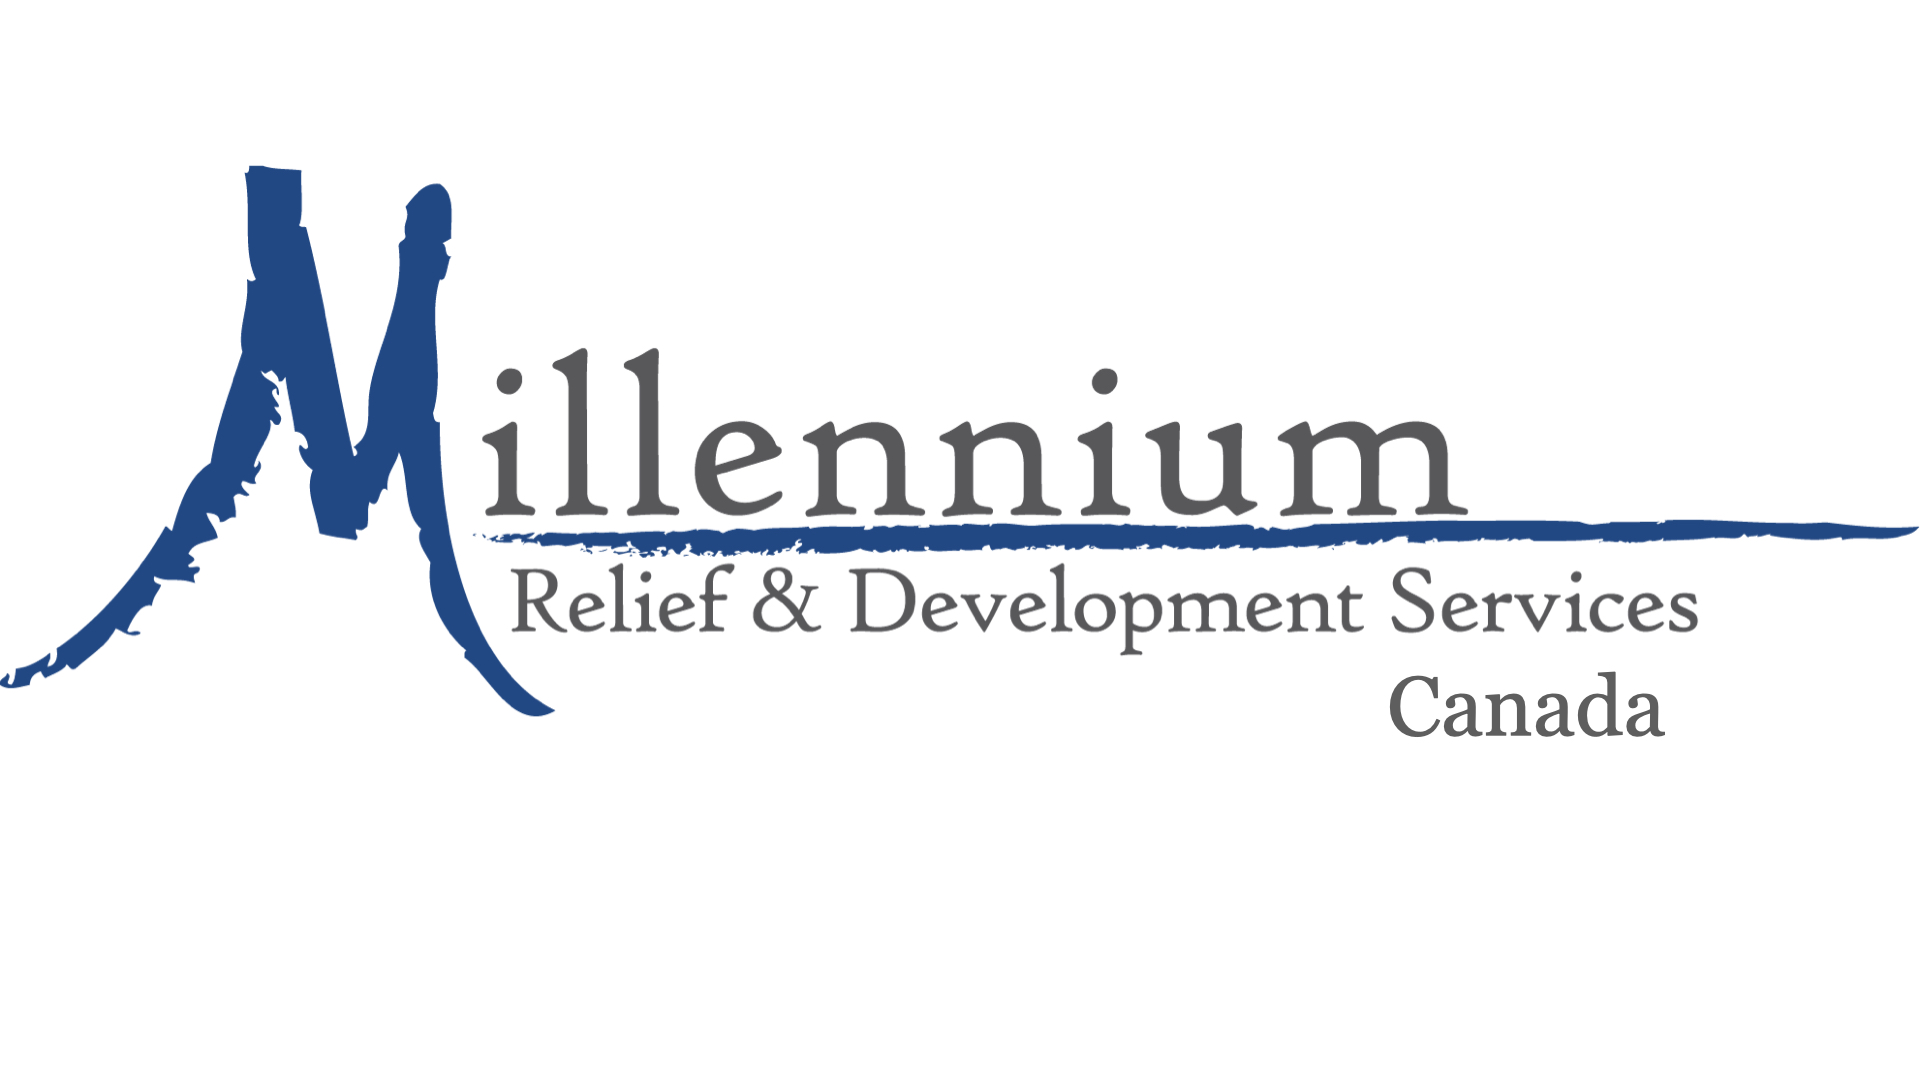 Millennium Relief & Development Services Canada logo